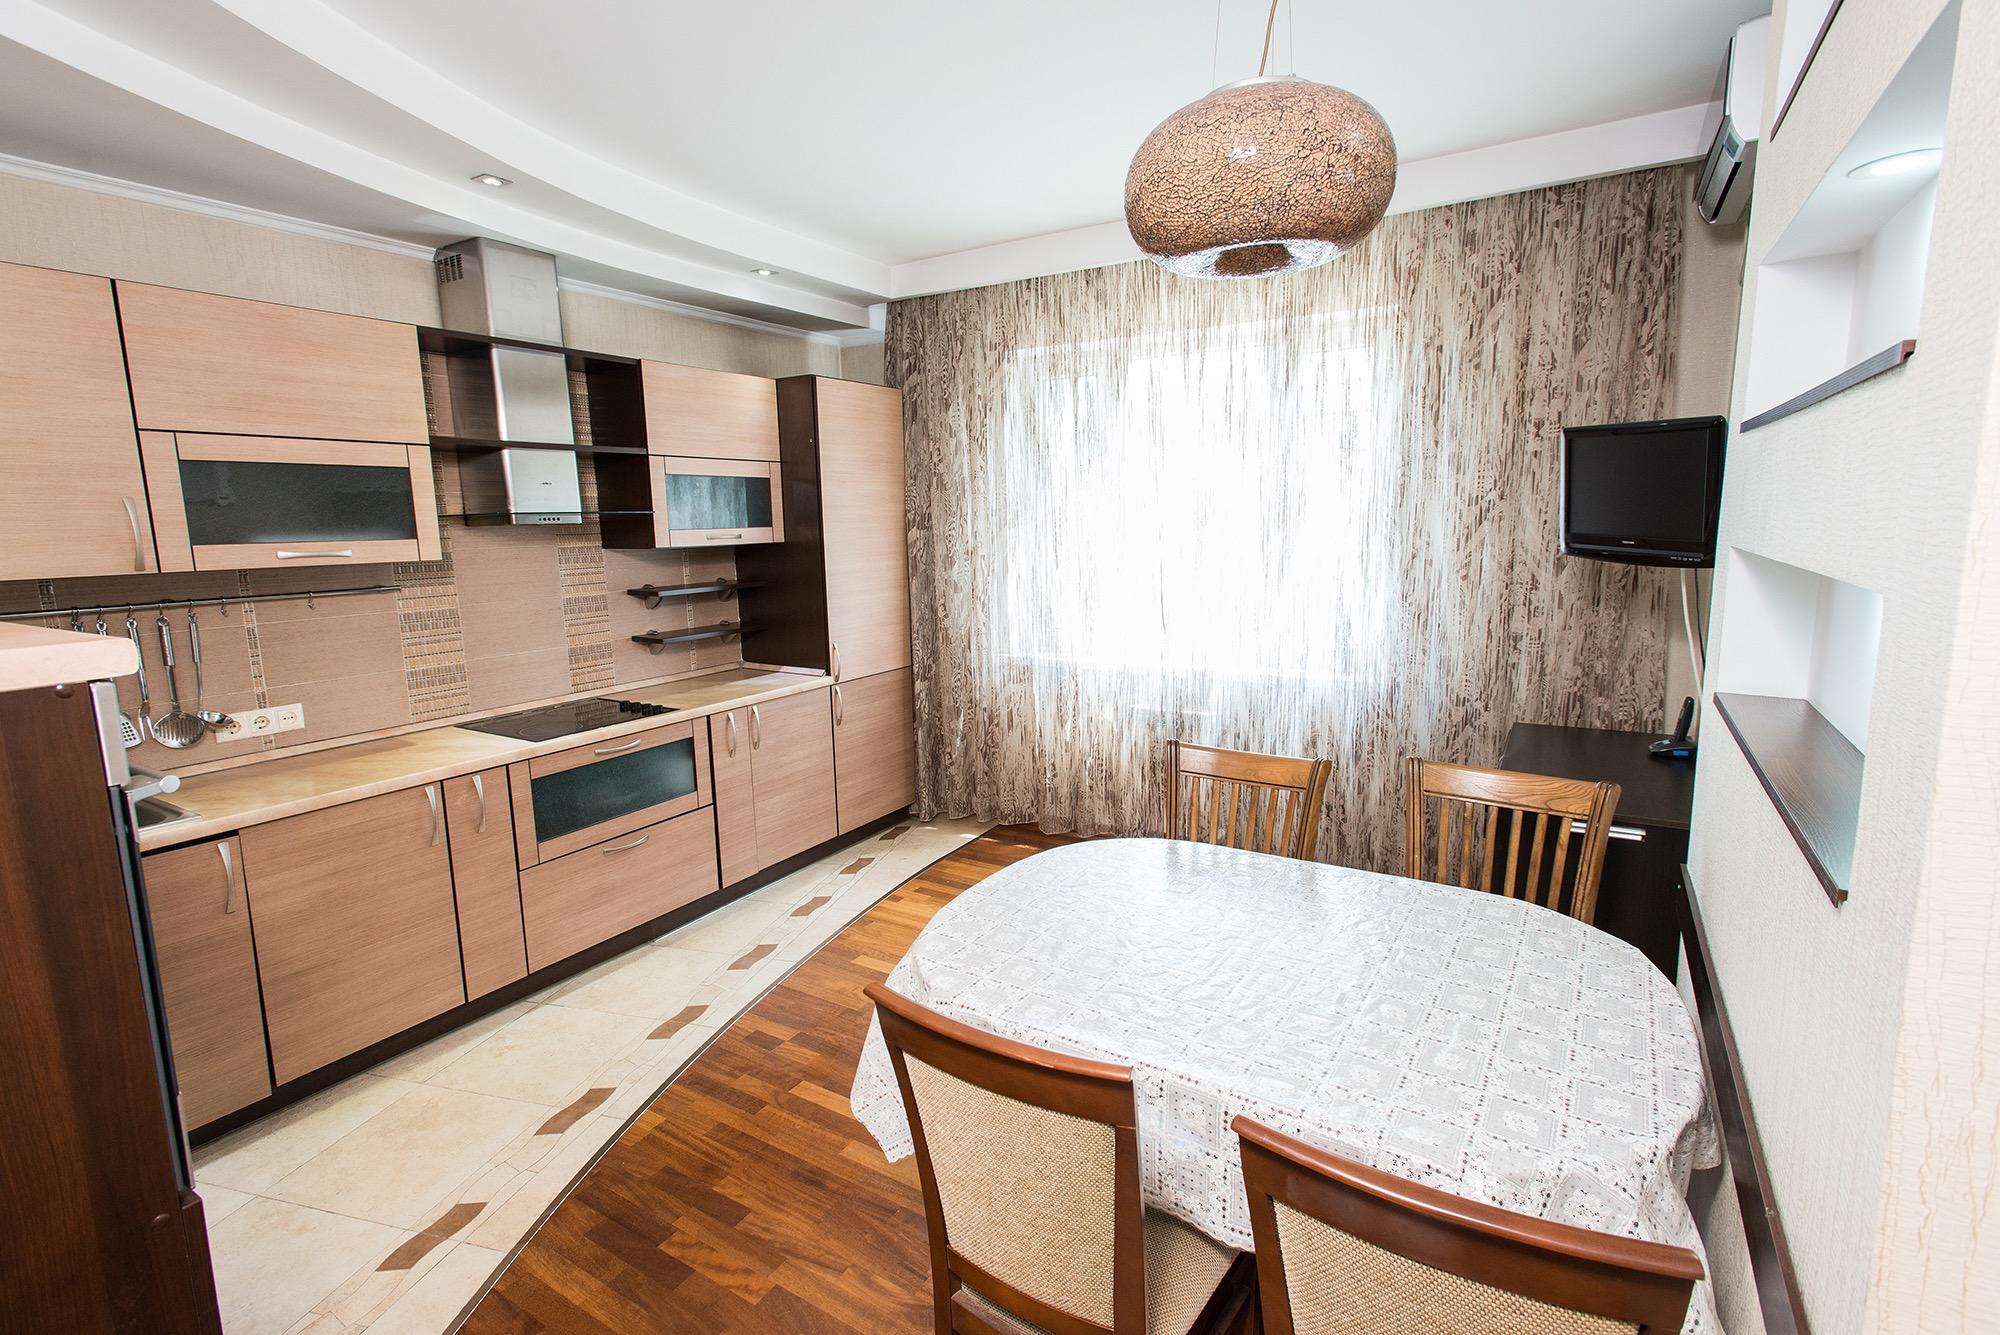 Астана квартира купить 1 комнатную. Квартиры в Казахстане. Казахстан апартаменты. Квартира в Казахстане кухня. Кухня для арендной квартиры.